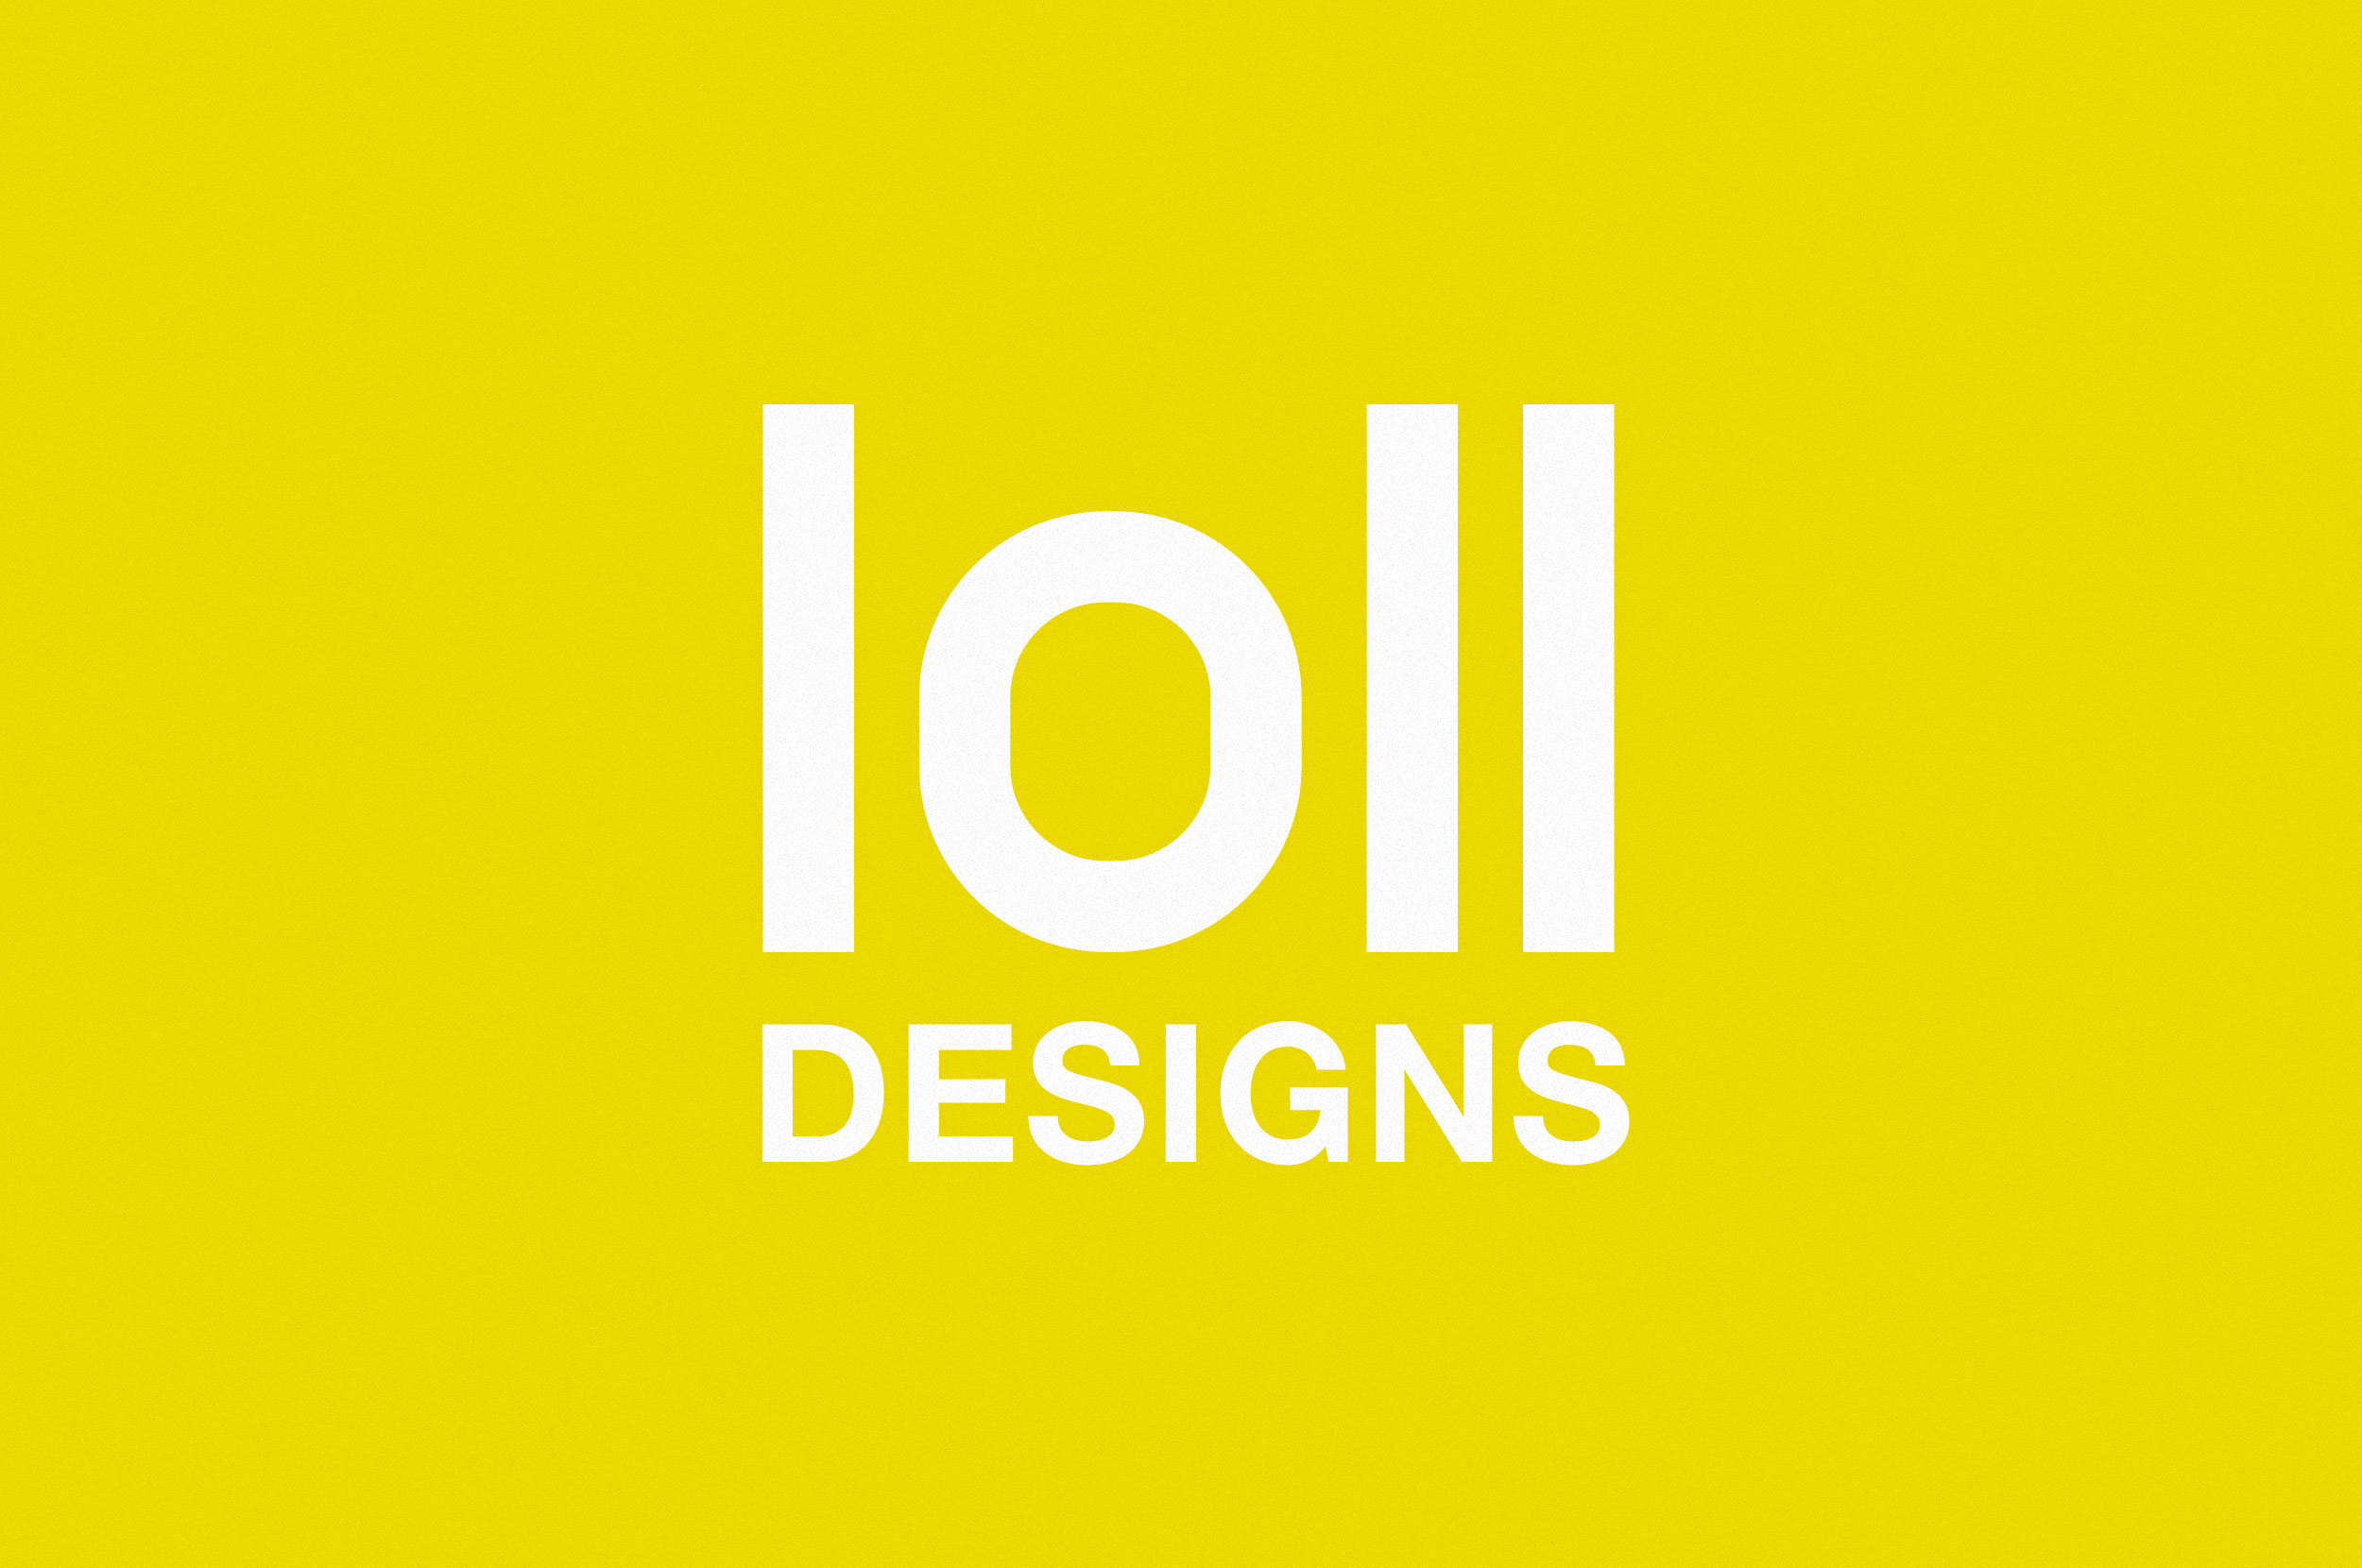 ICFF – Loll Designs